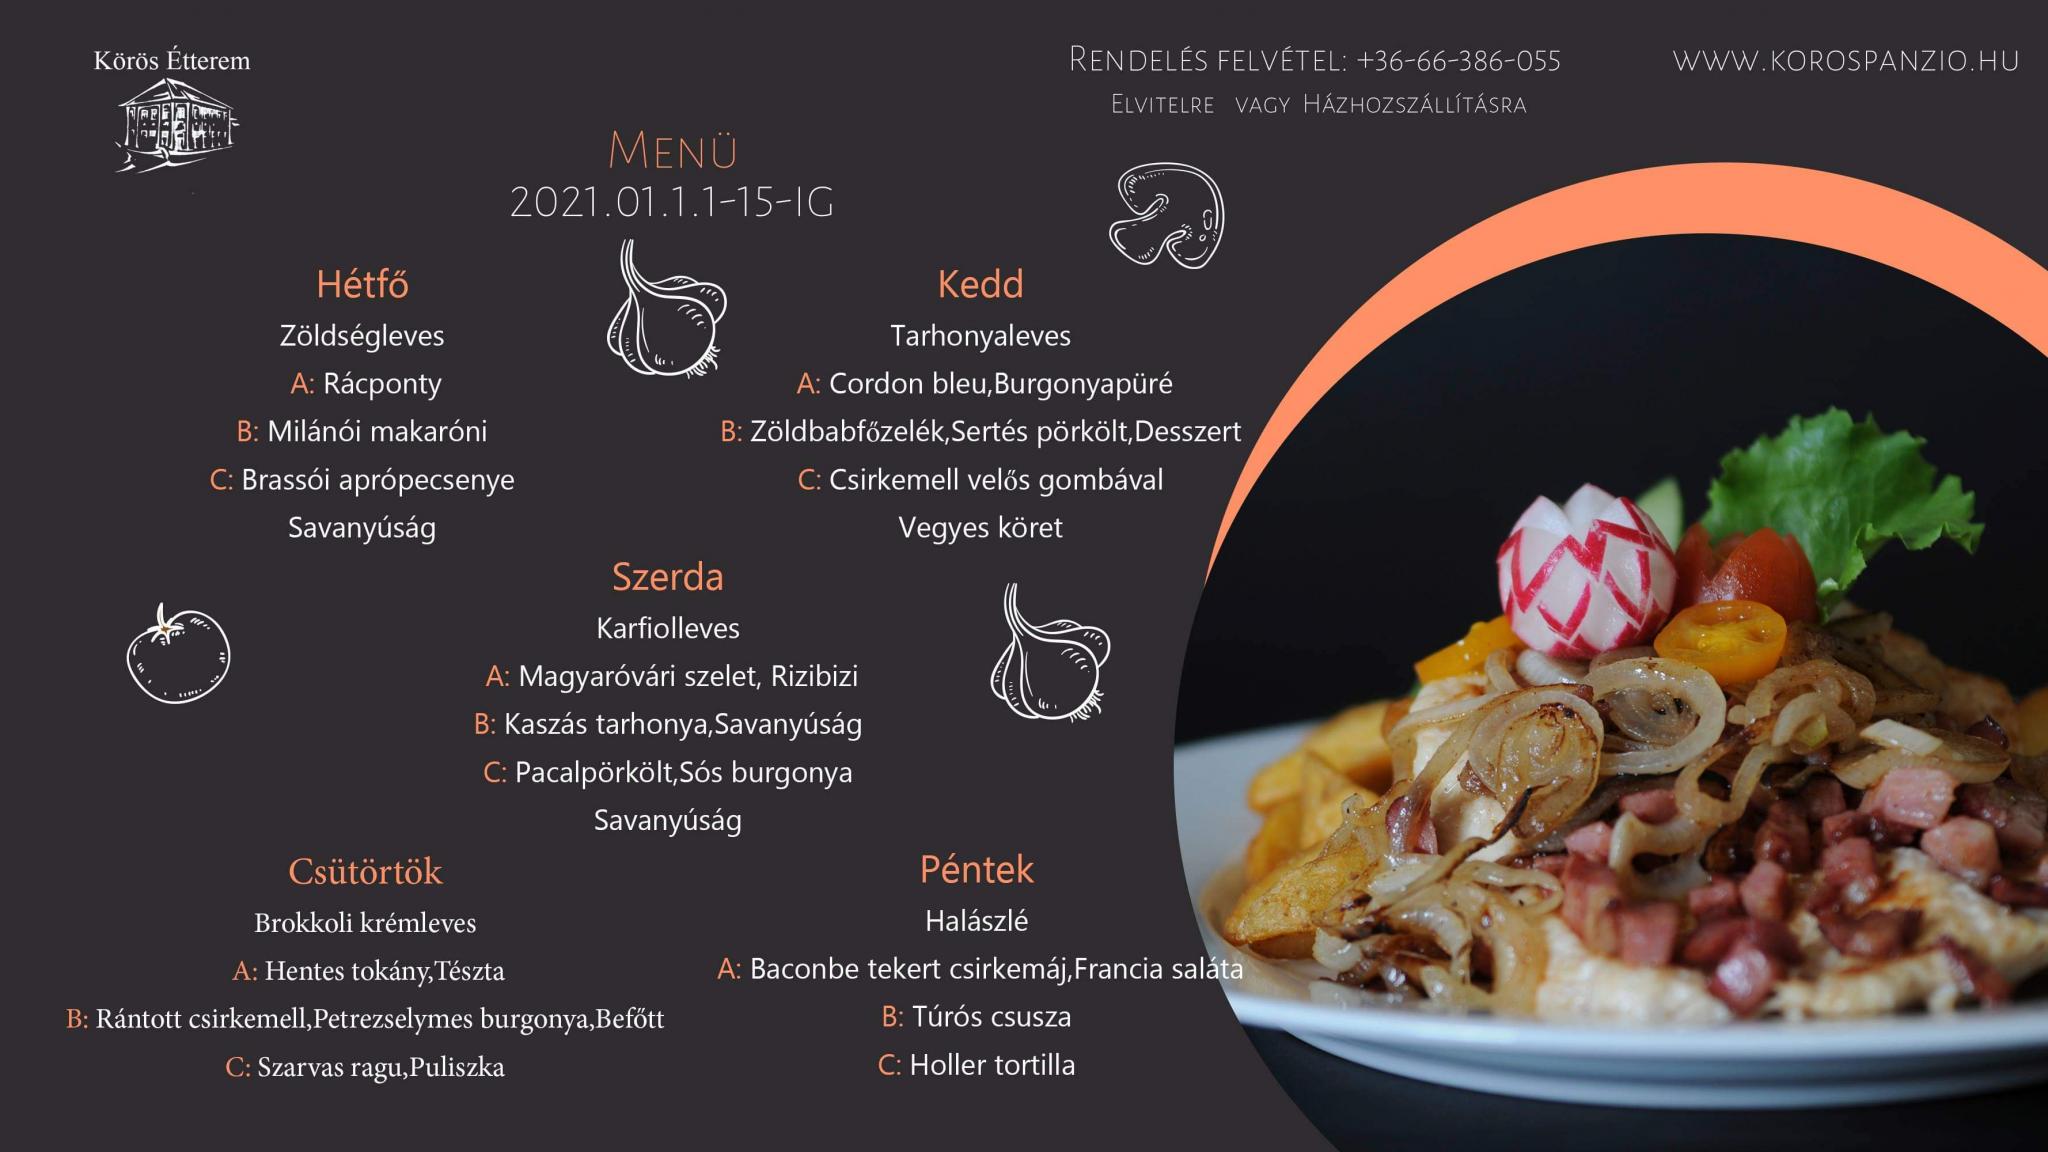 kristály étterem győr heti menu.html